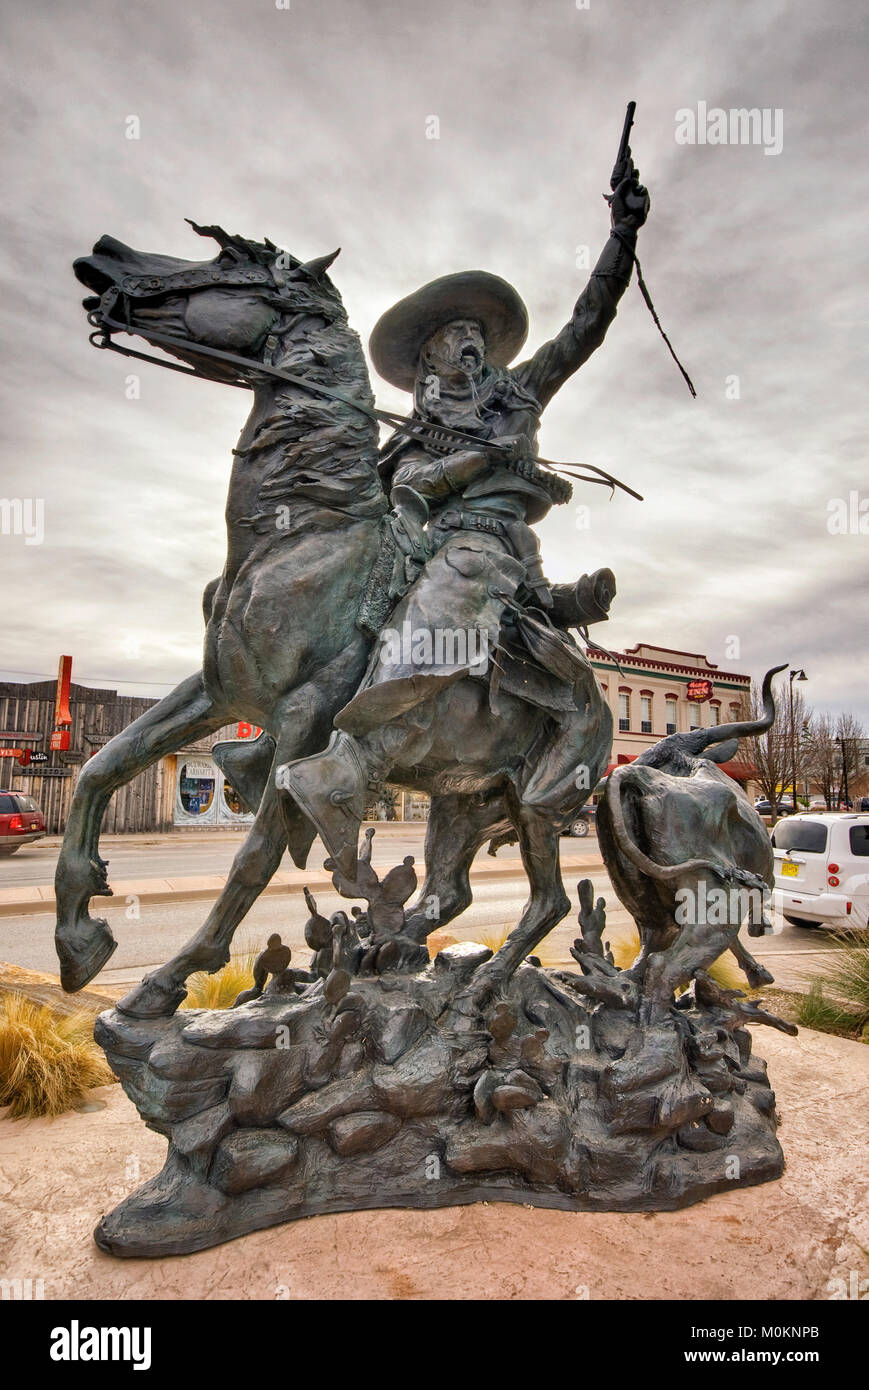 The Vaquero sculpture by Michael Hamby in Artesia, New Mexico, USA Stock Photo